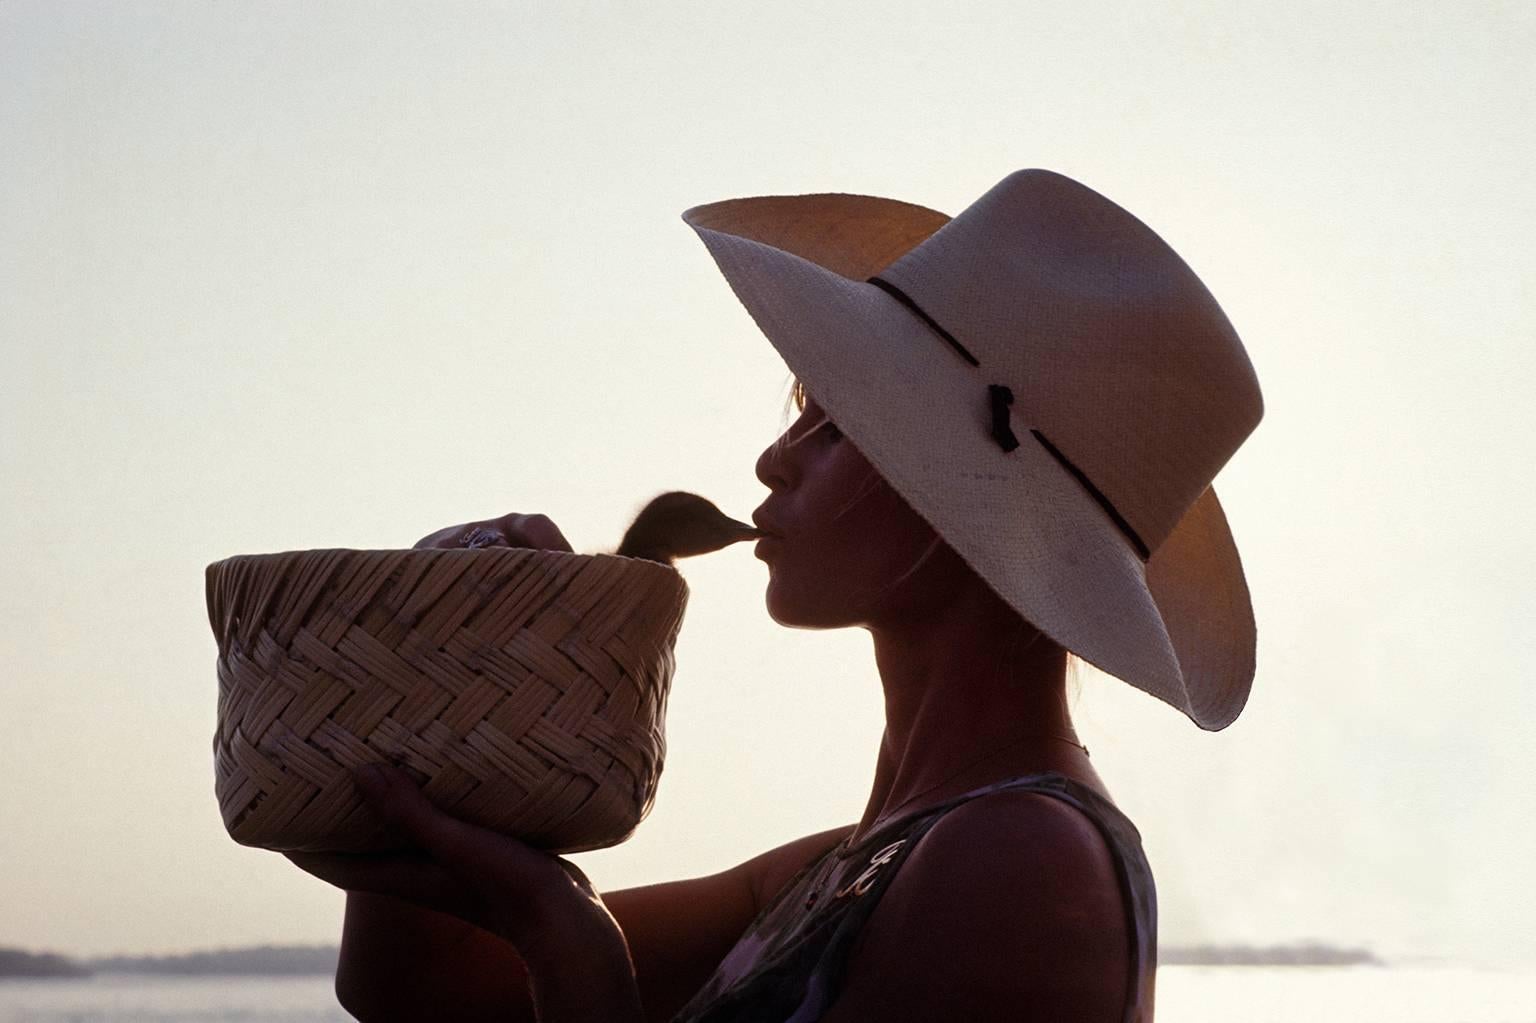 Ghislain Dussart Figurative Photograph - 'Bardot Kiss' Brigitte Bardot, Mexico